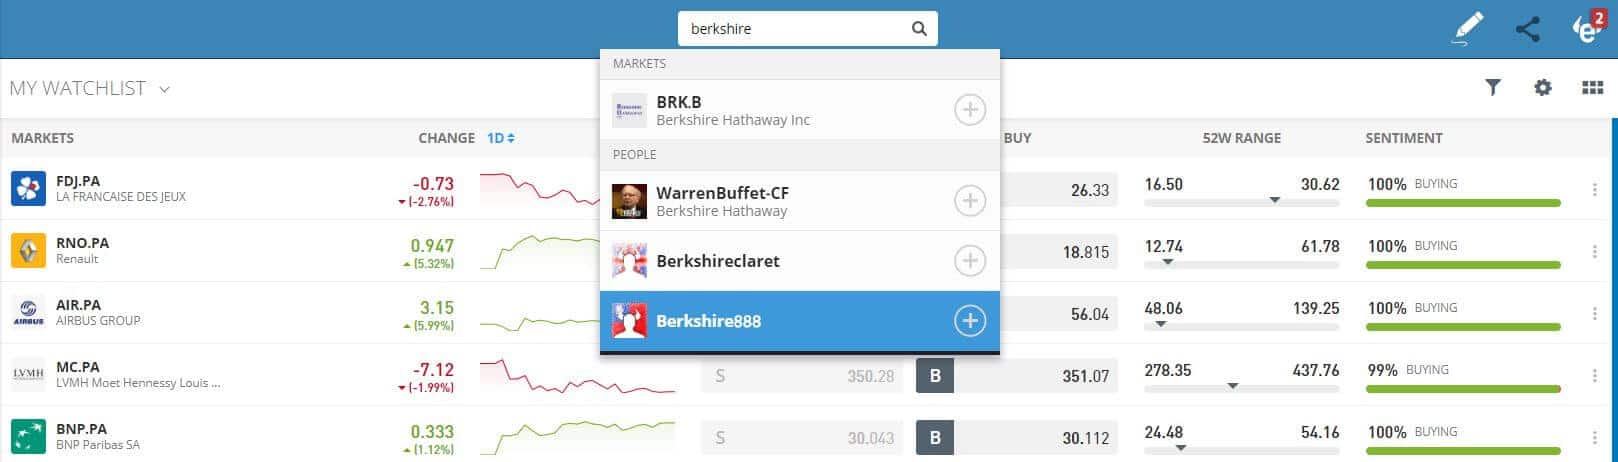 Search for Berkshire Hathaway stock on eToro